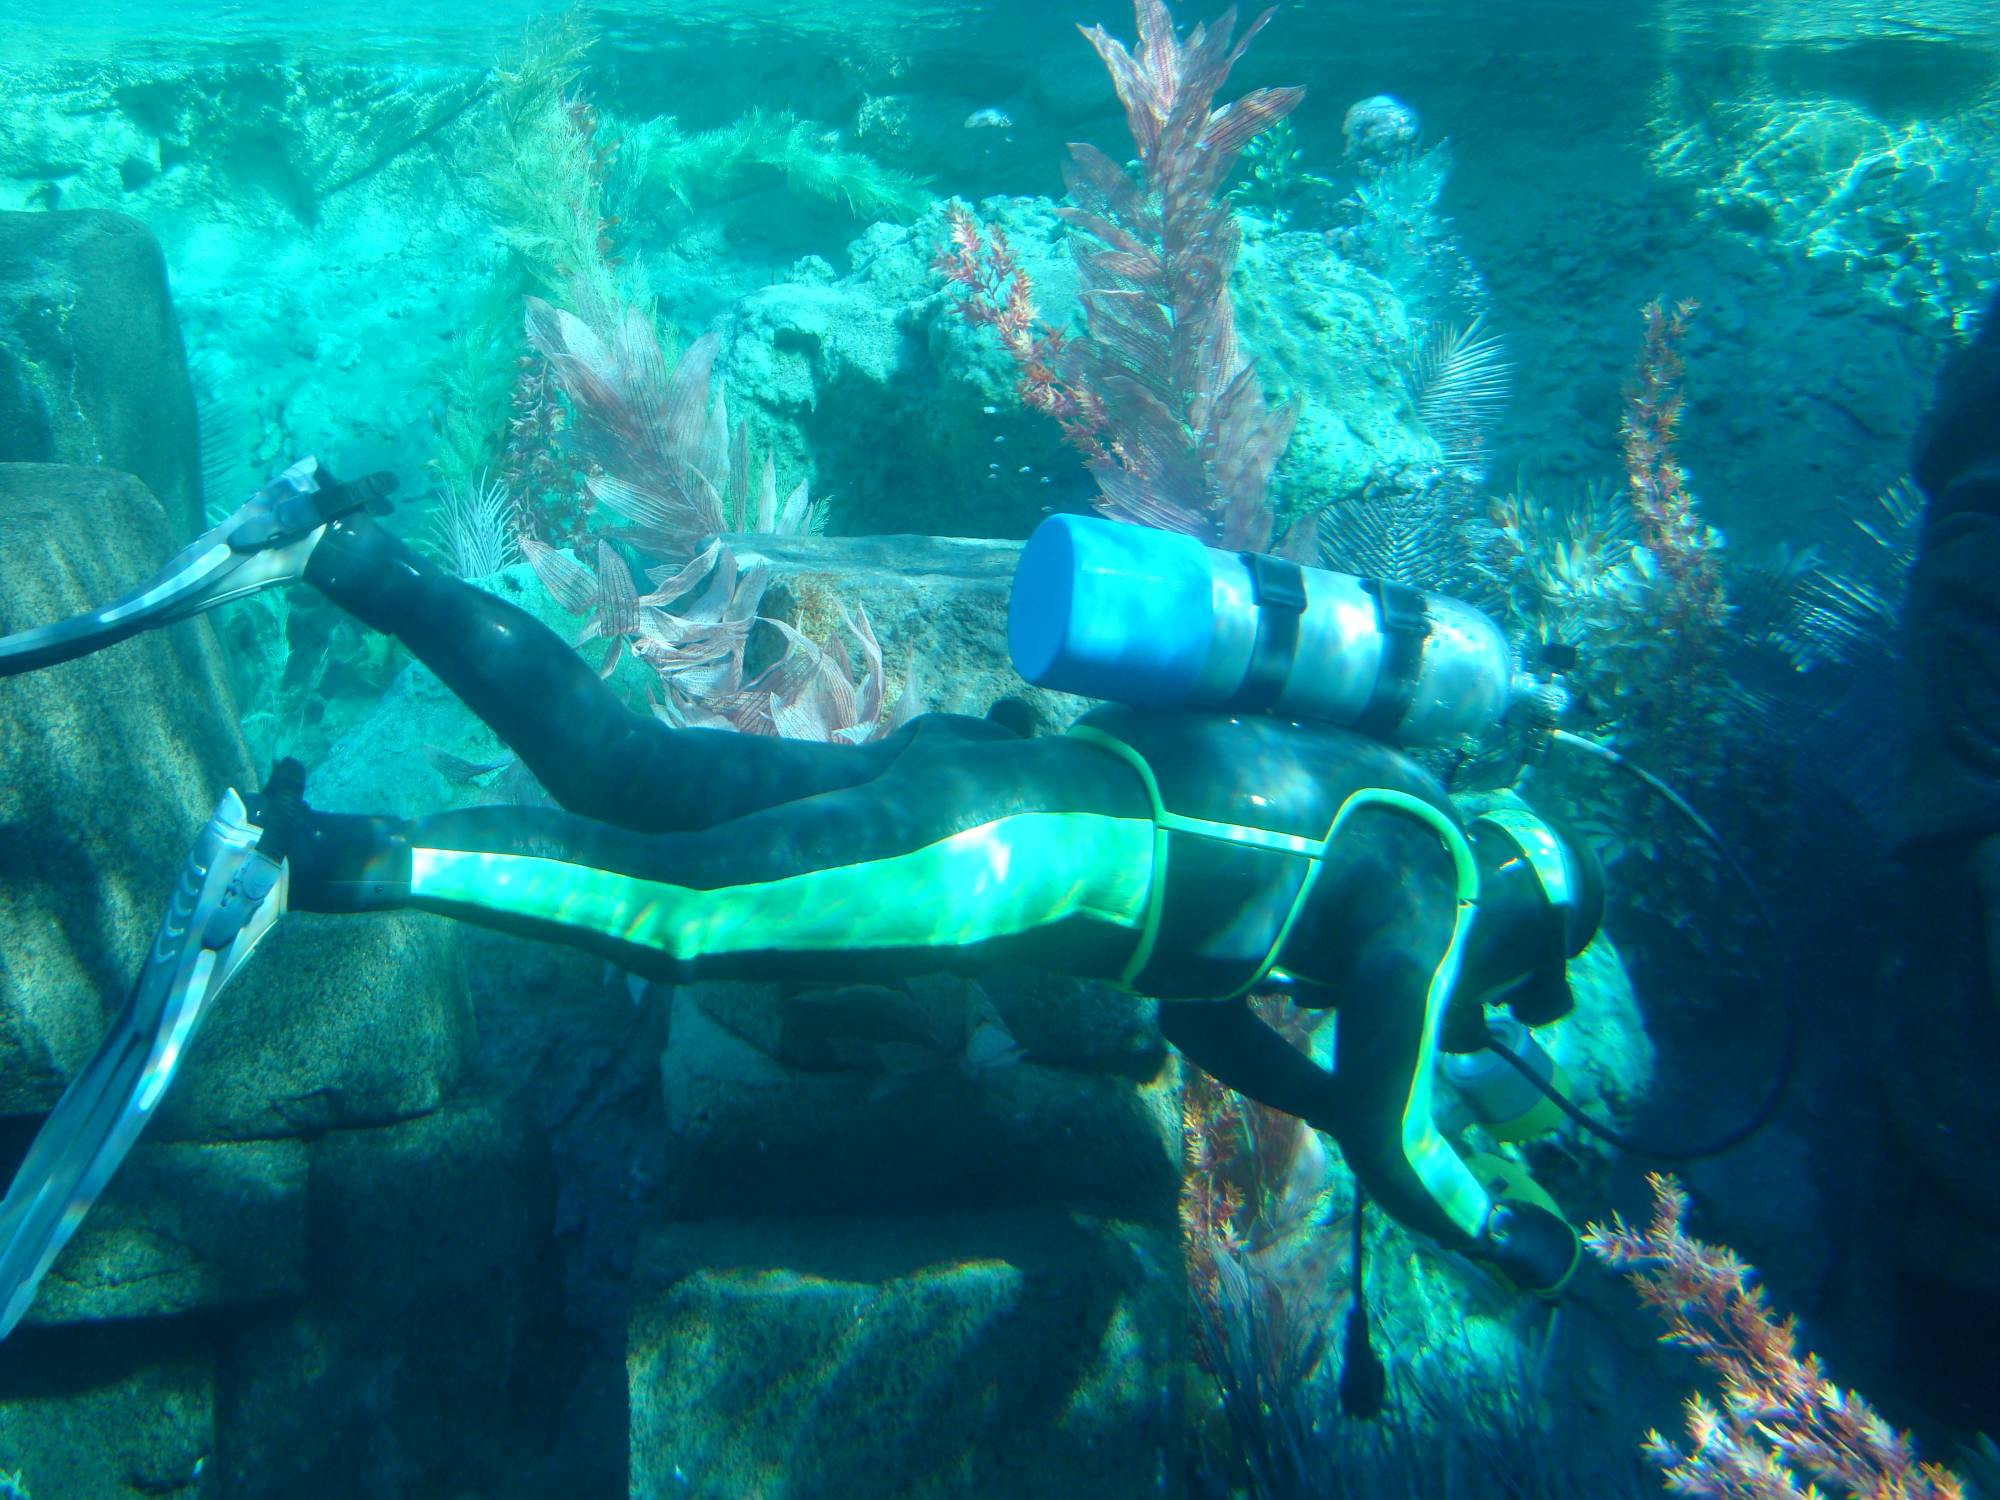 Disneyland - Finding Nemo Submarine Voyage